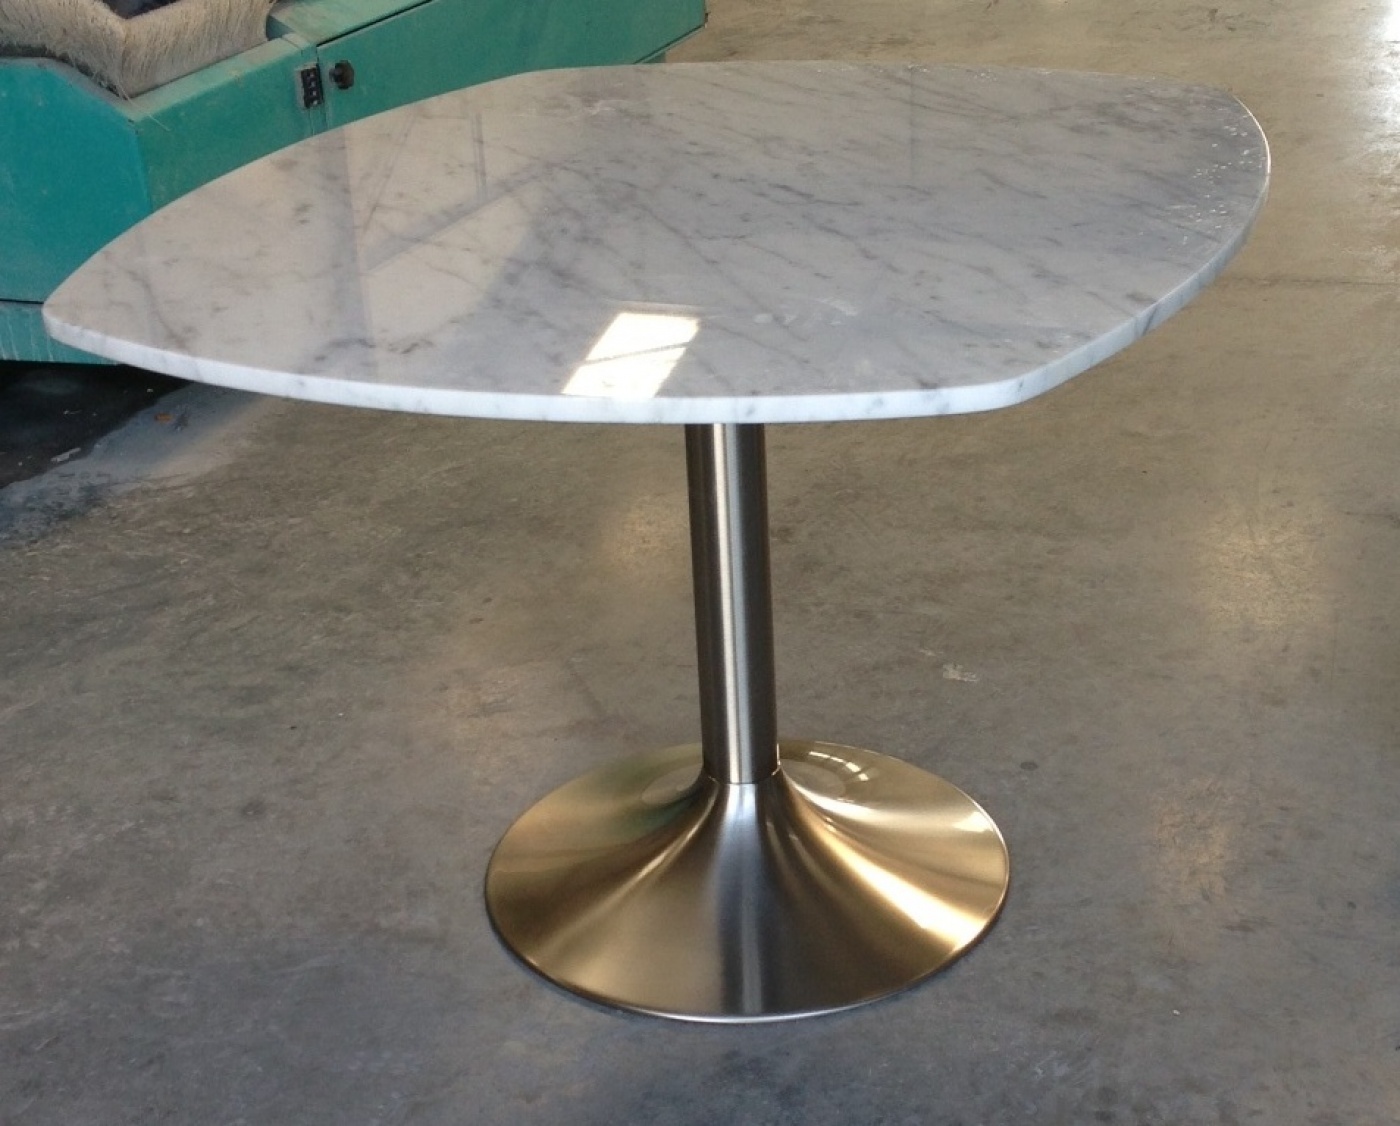 Semi-précieux Table Bianco Carrara sur pied inox satiné